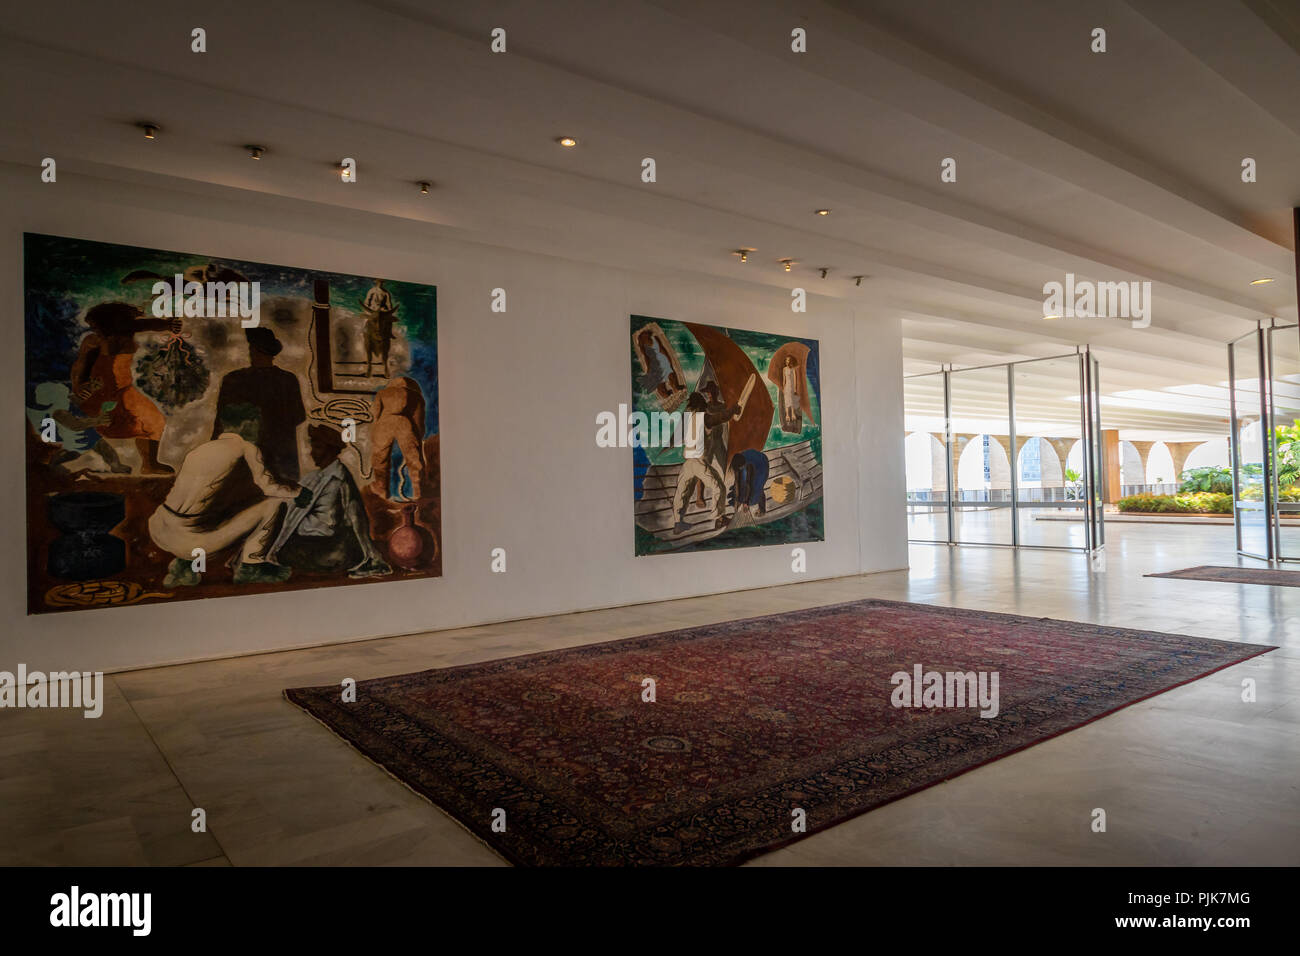 Portinari Room at Itamaraty Palace interior - Brasilia, Distrito Federal, Brazil Stock Photo